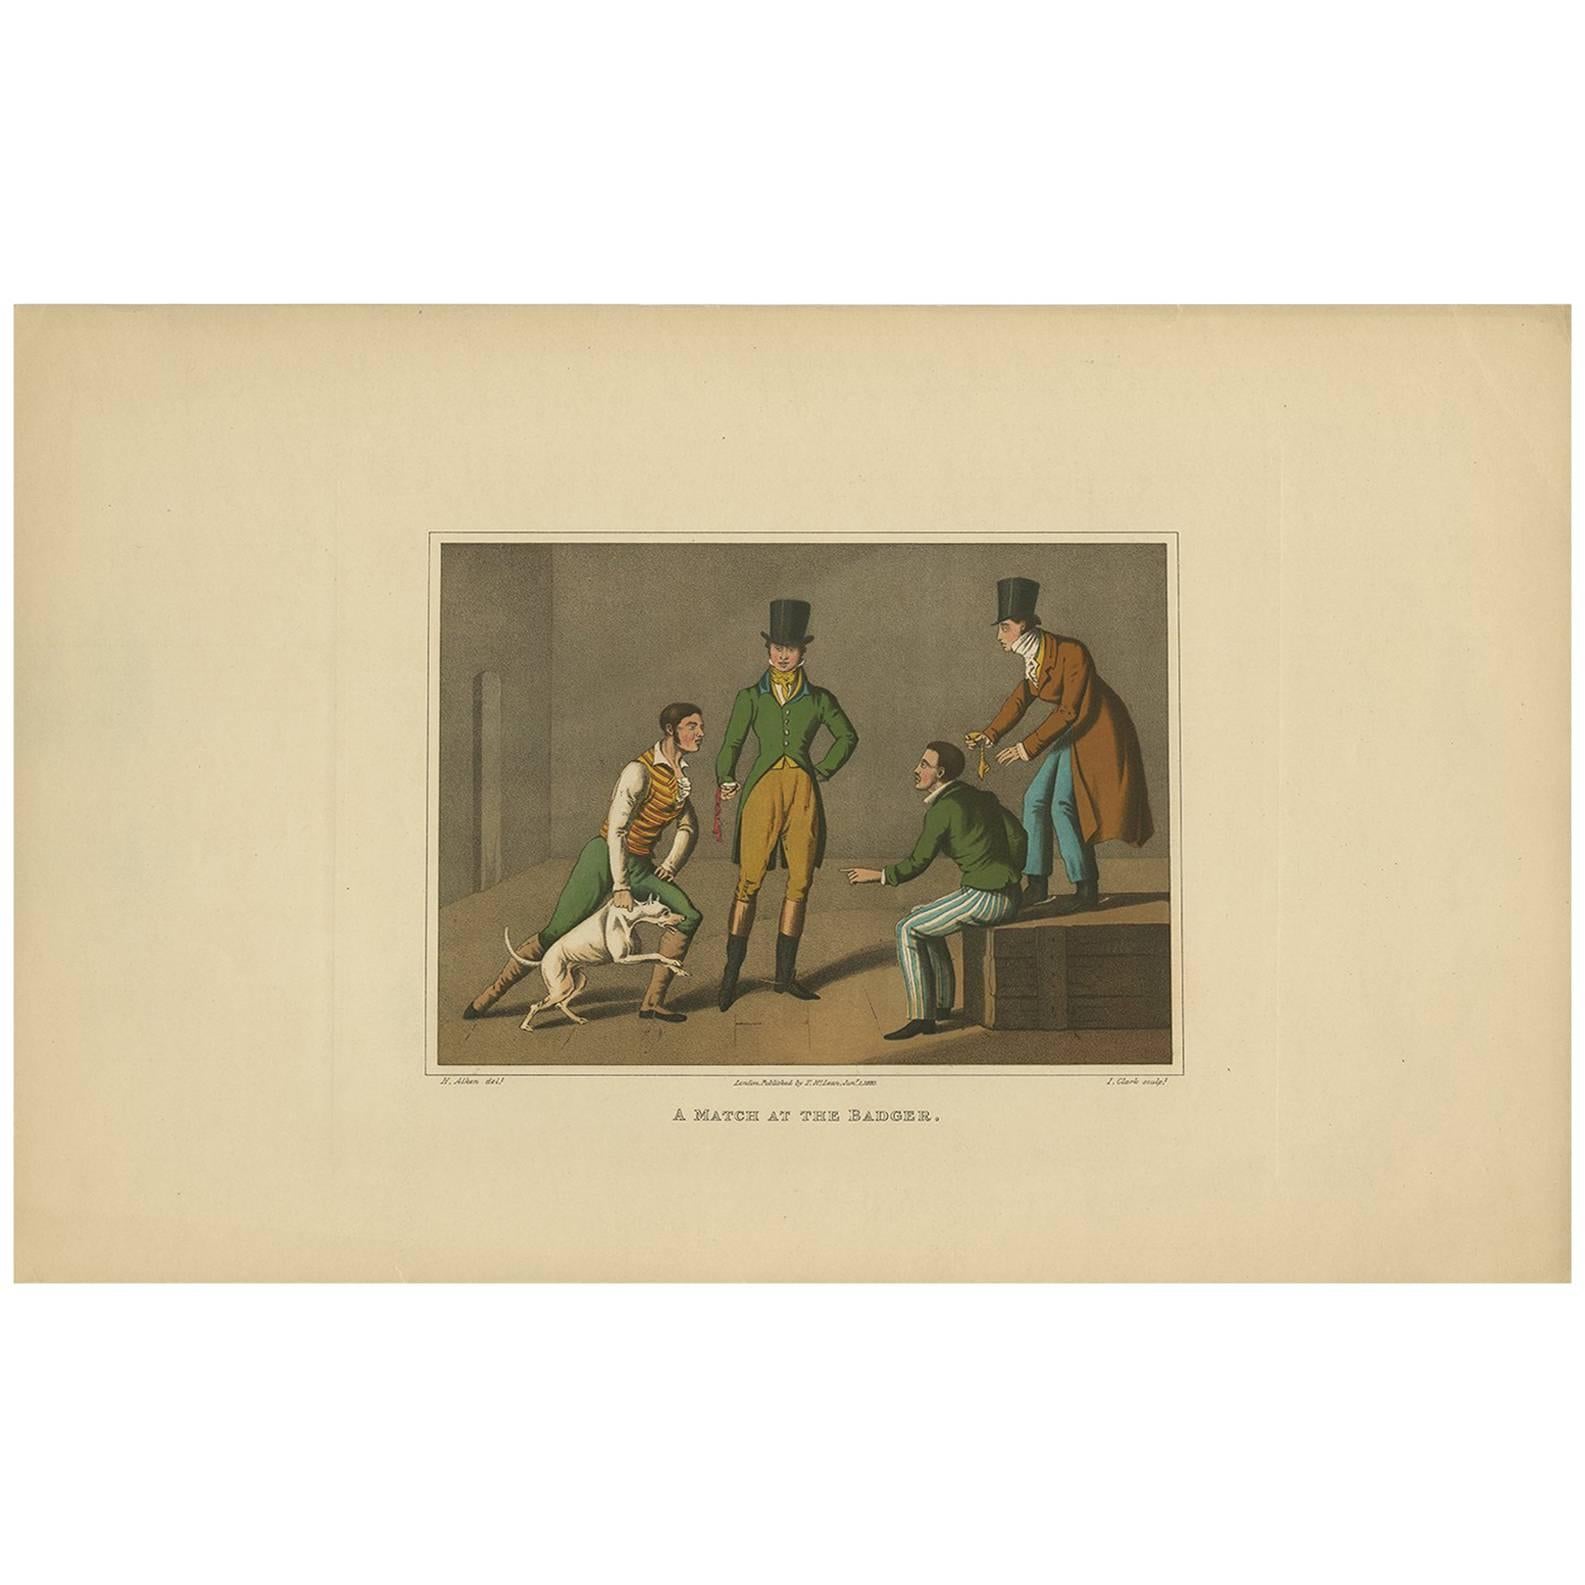 Antique Aquatint 'A Match at the Badger' by J. Clark, 1820